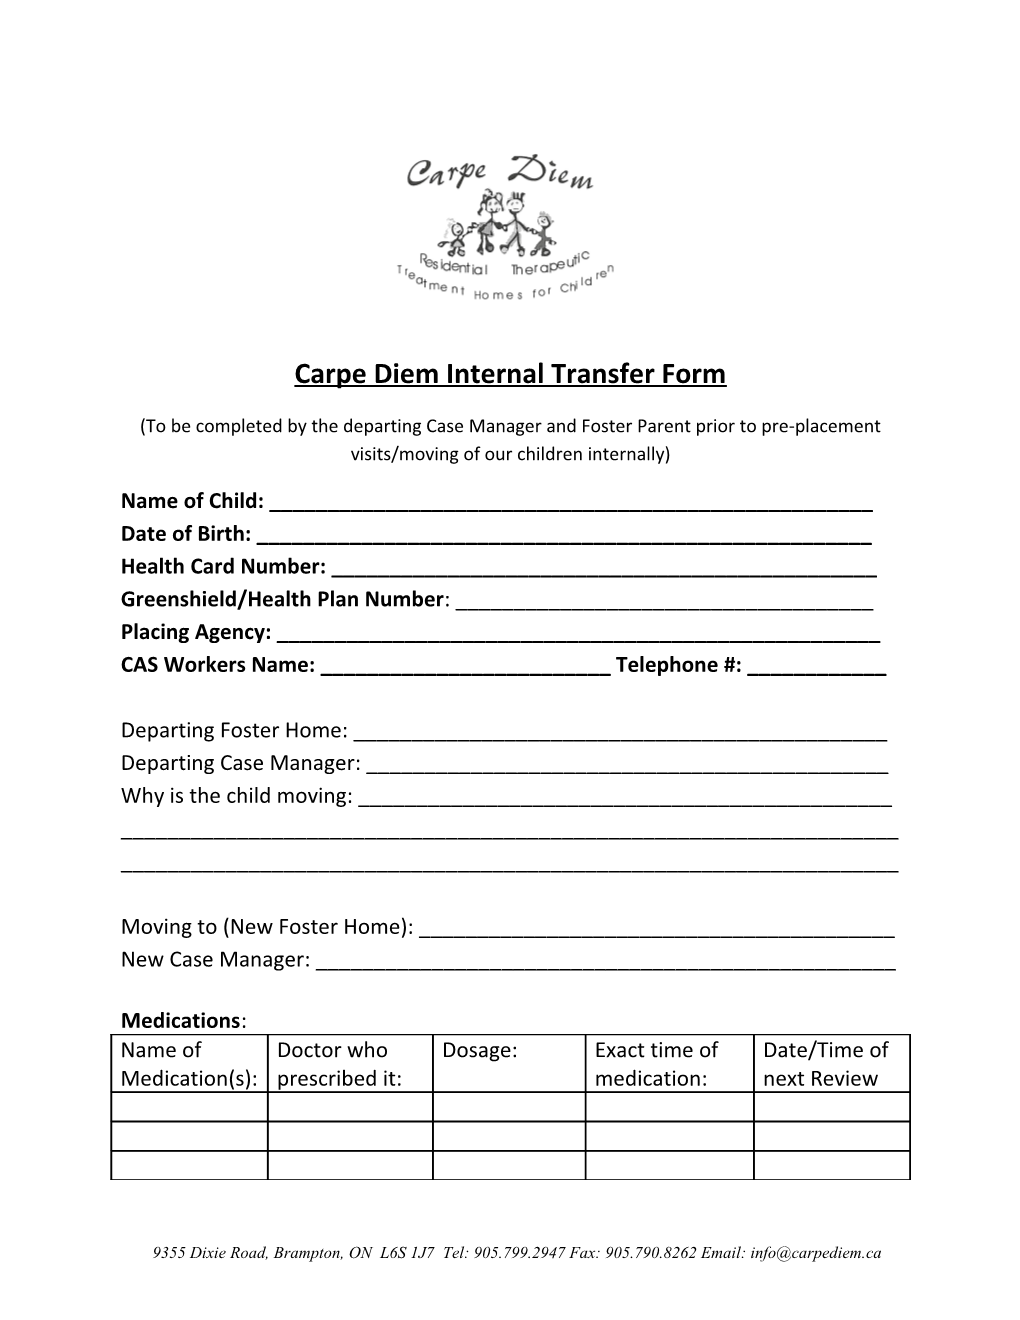 Carpe Diem Internal Transfer Form